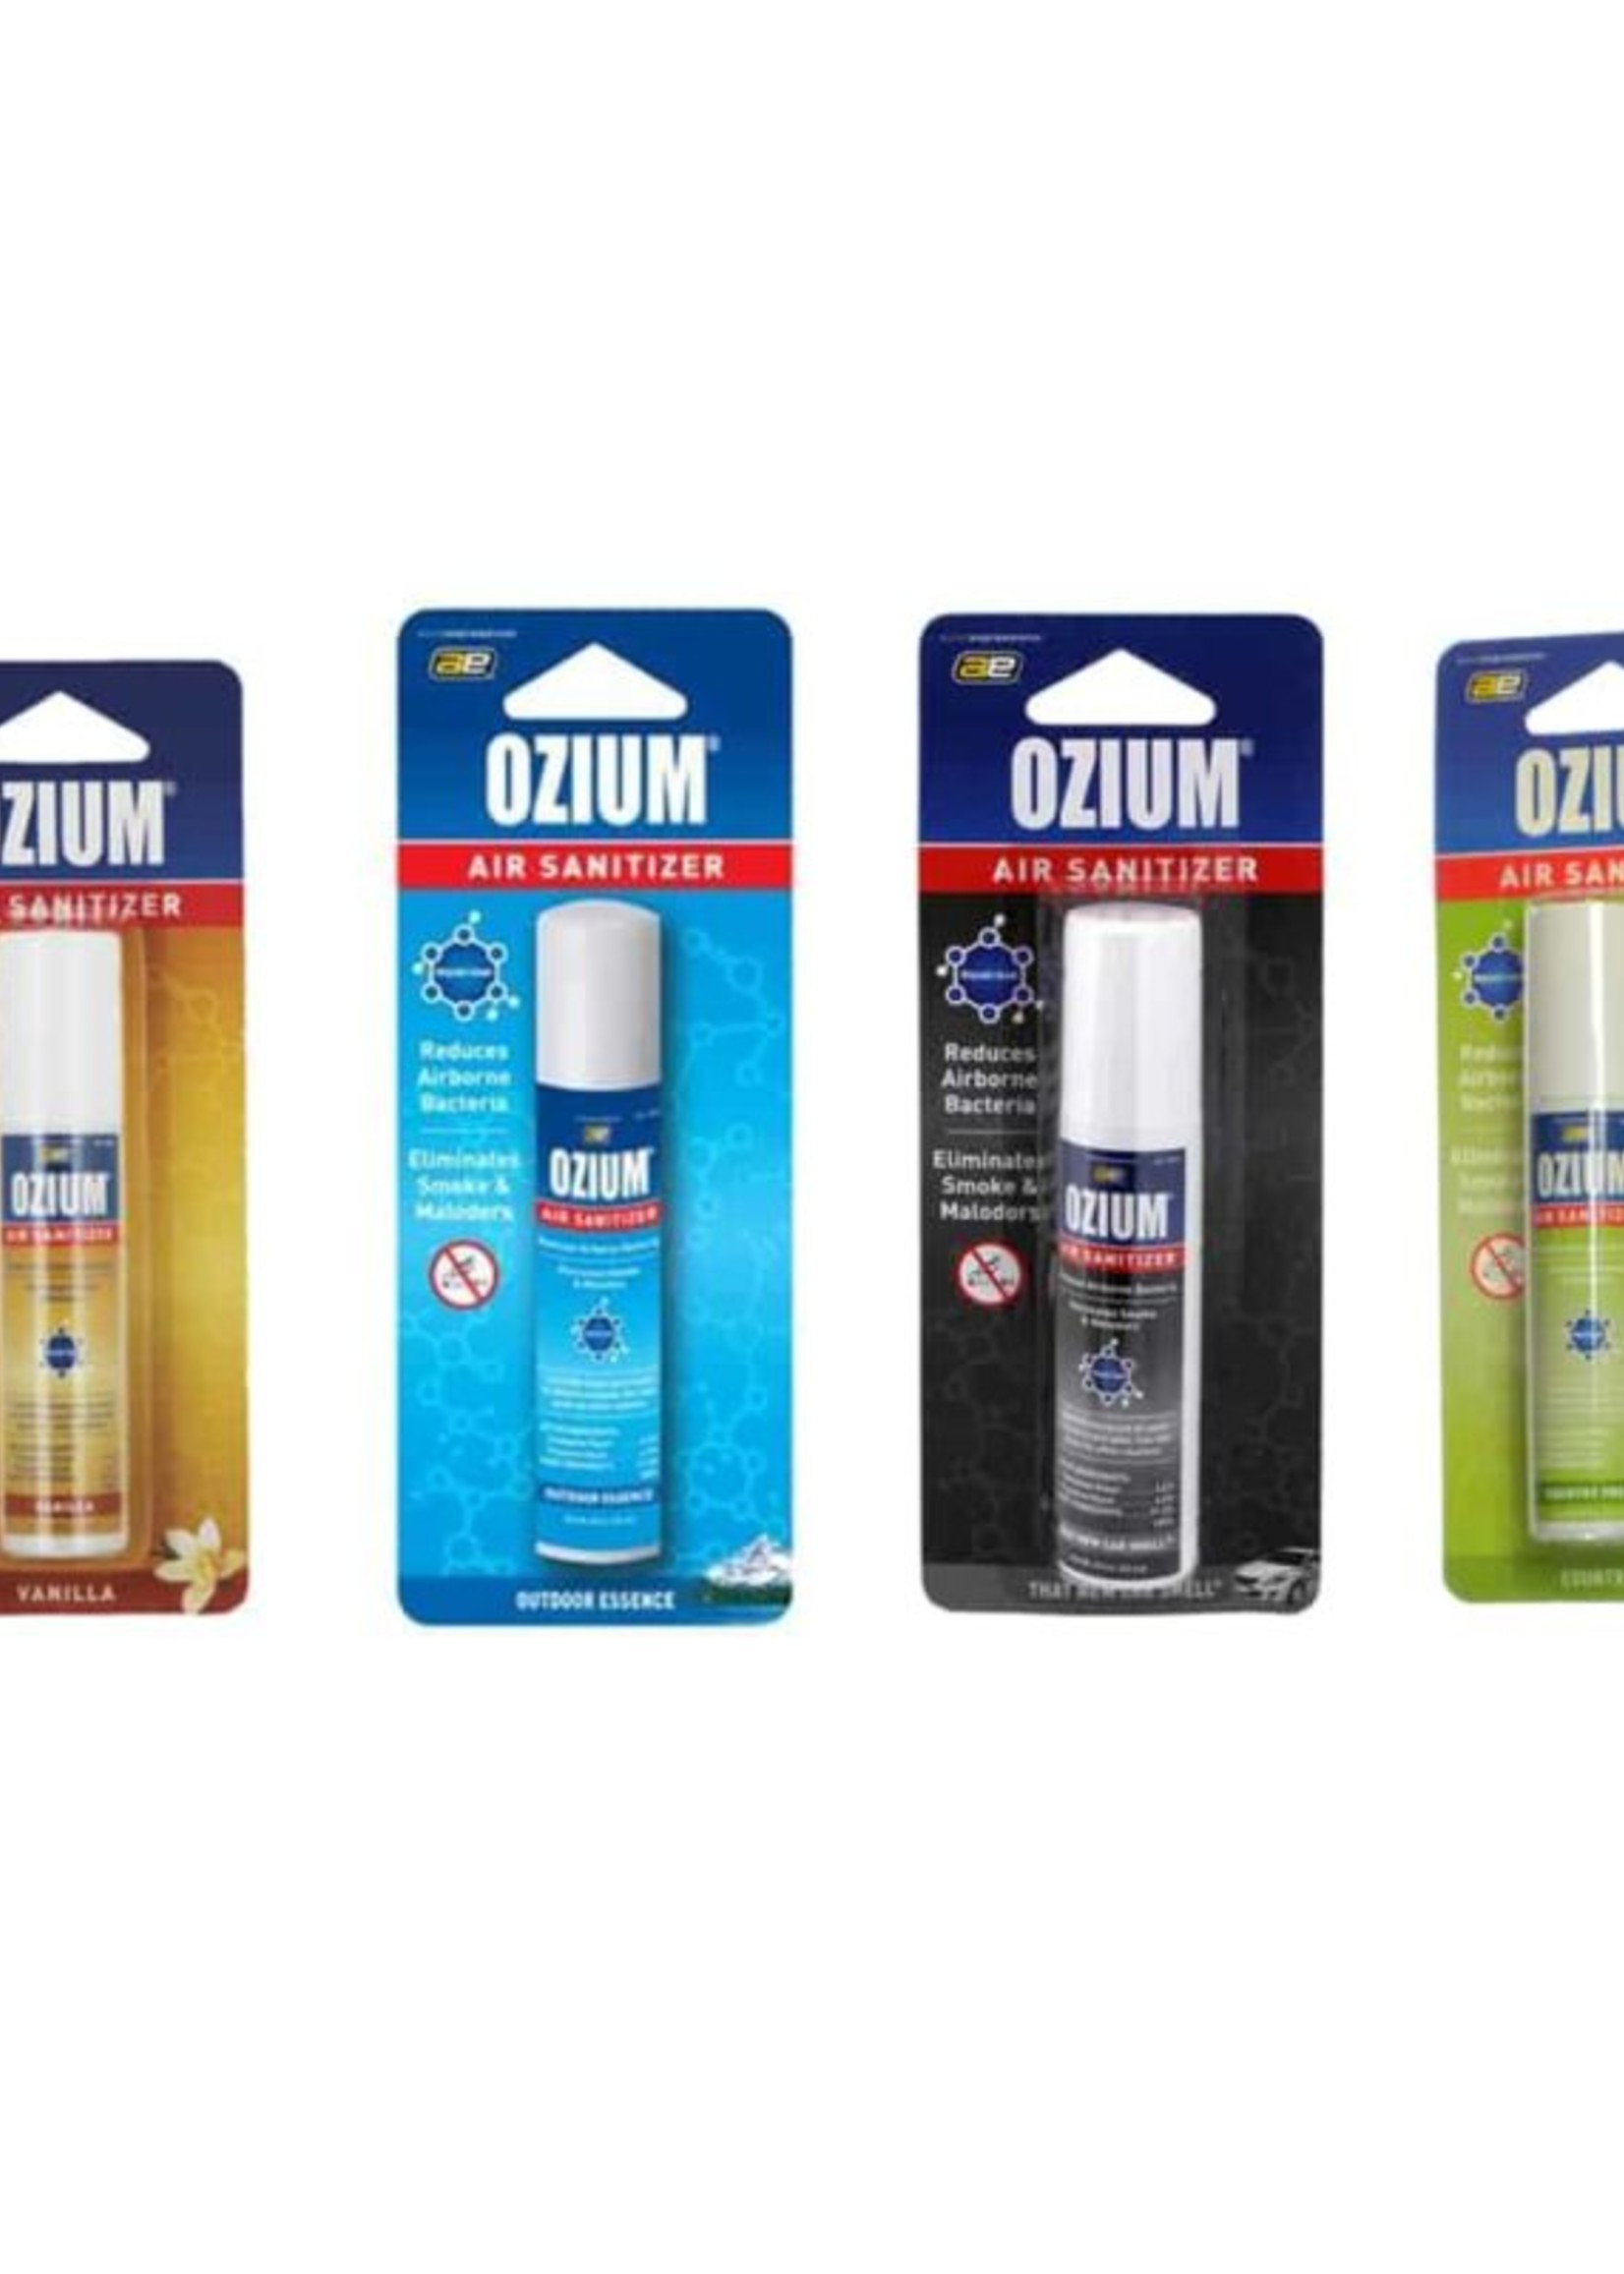 Ozium Ozium Air Sanitizer 3.5oz